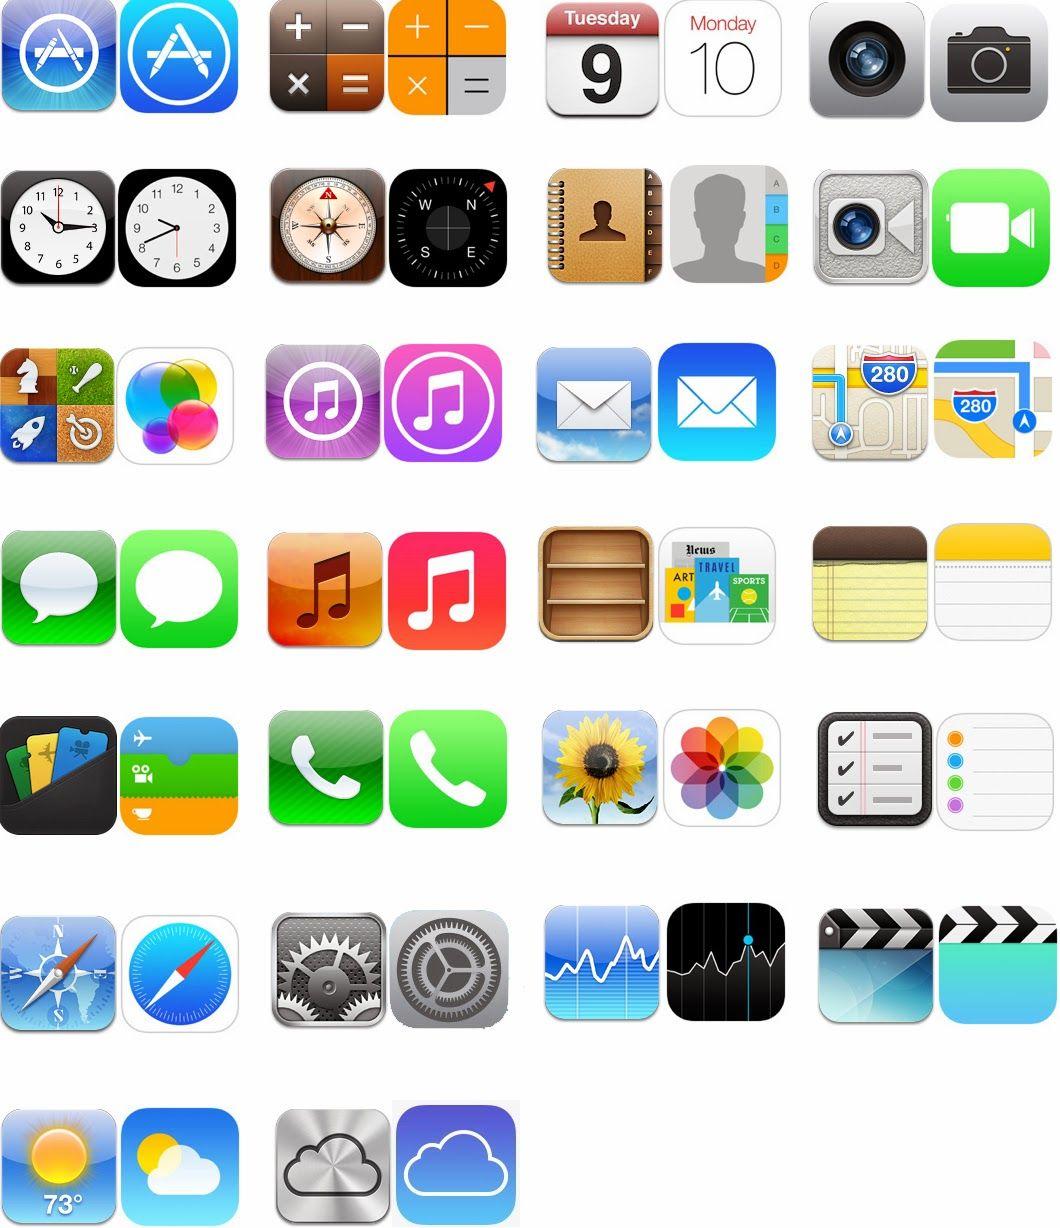 iPad App Logo - MUH82 iPad App: Logo design